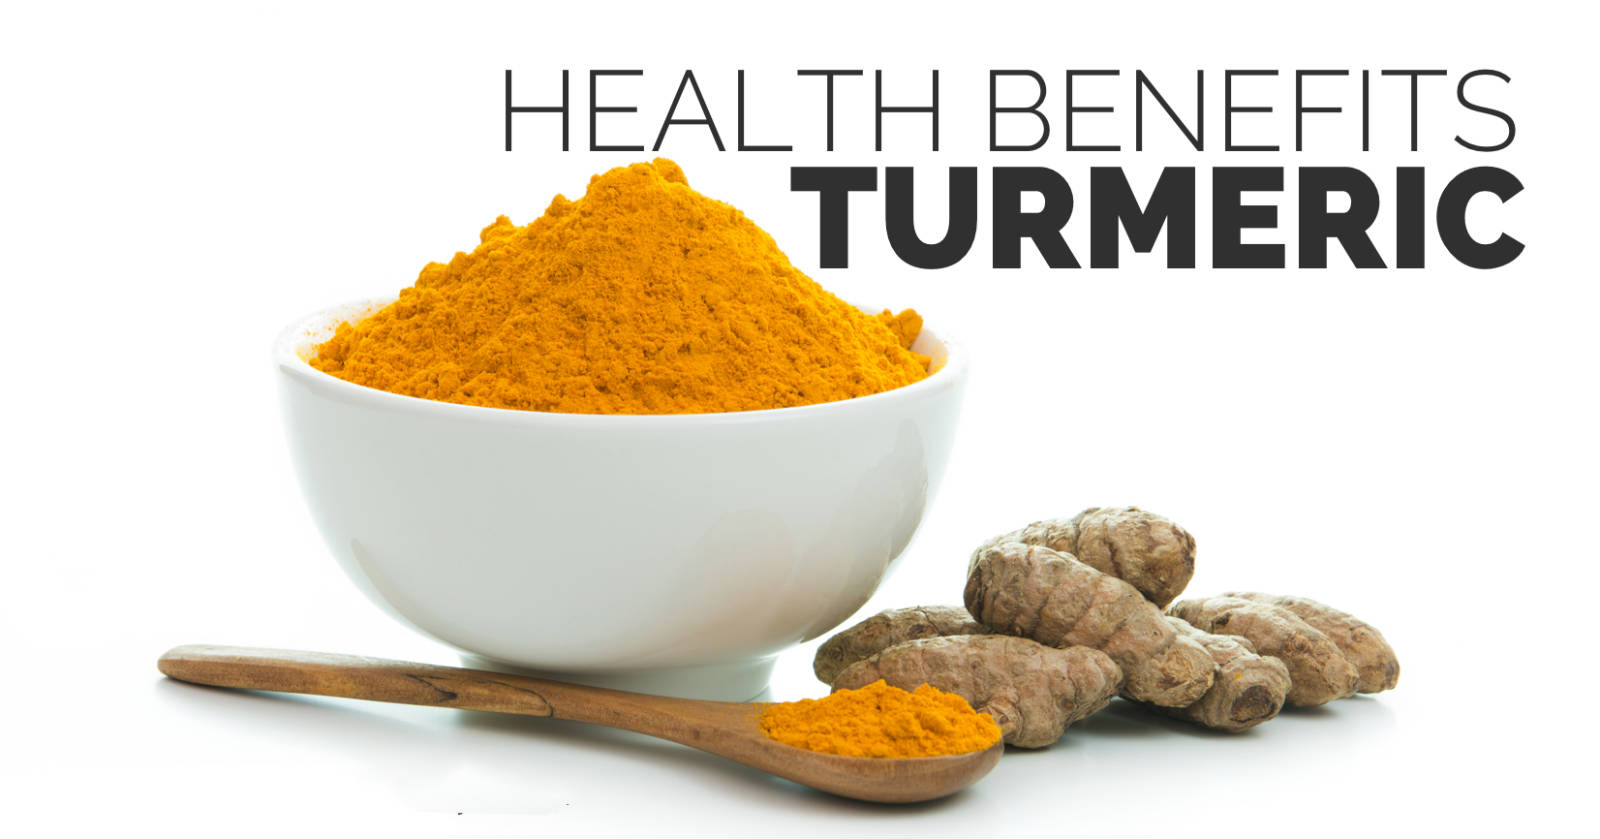 Turmeric Health Benefits